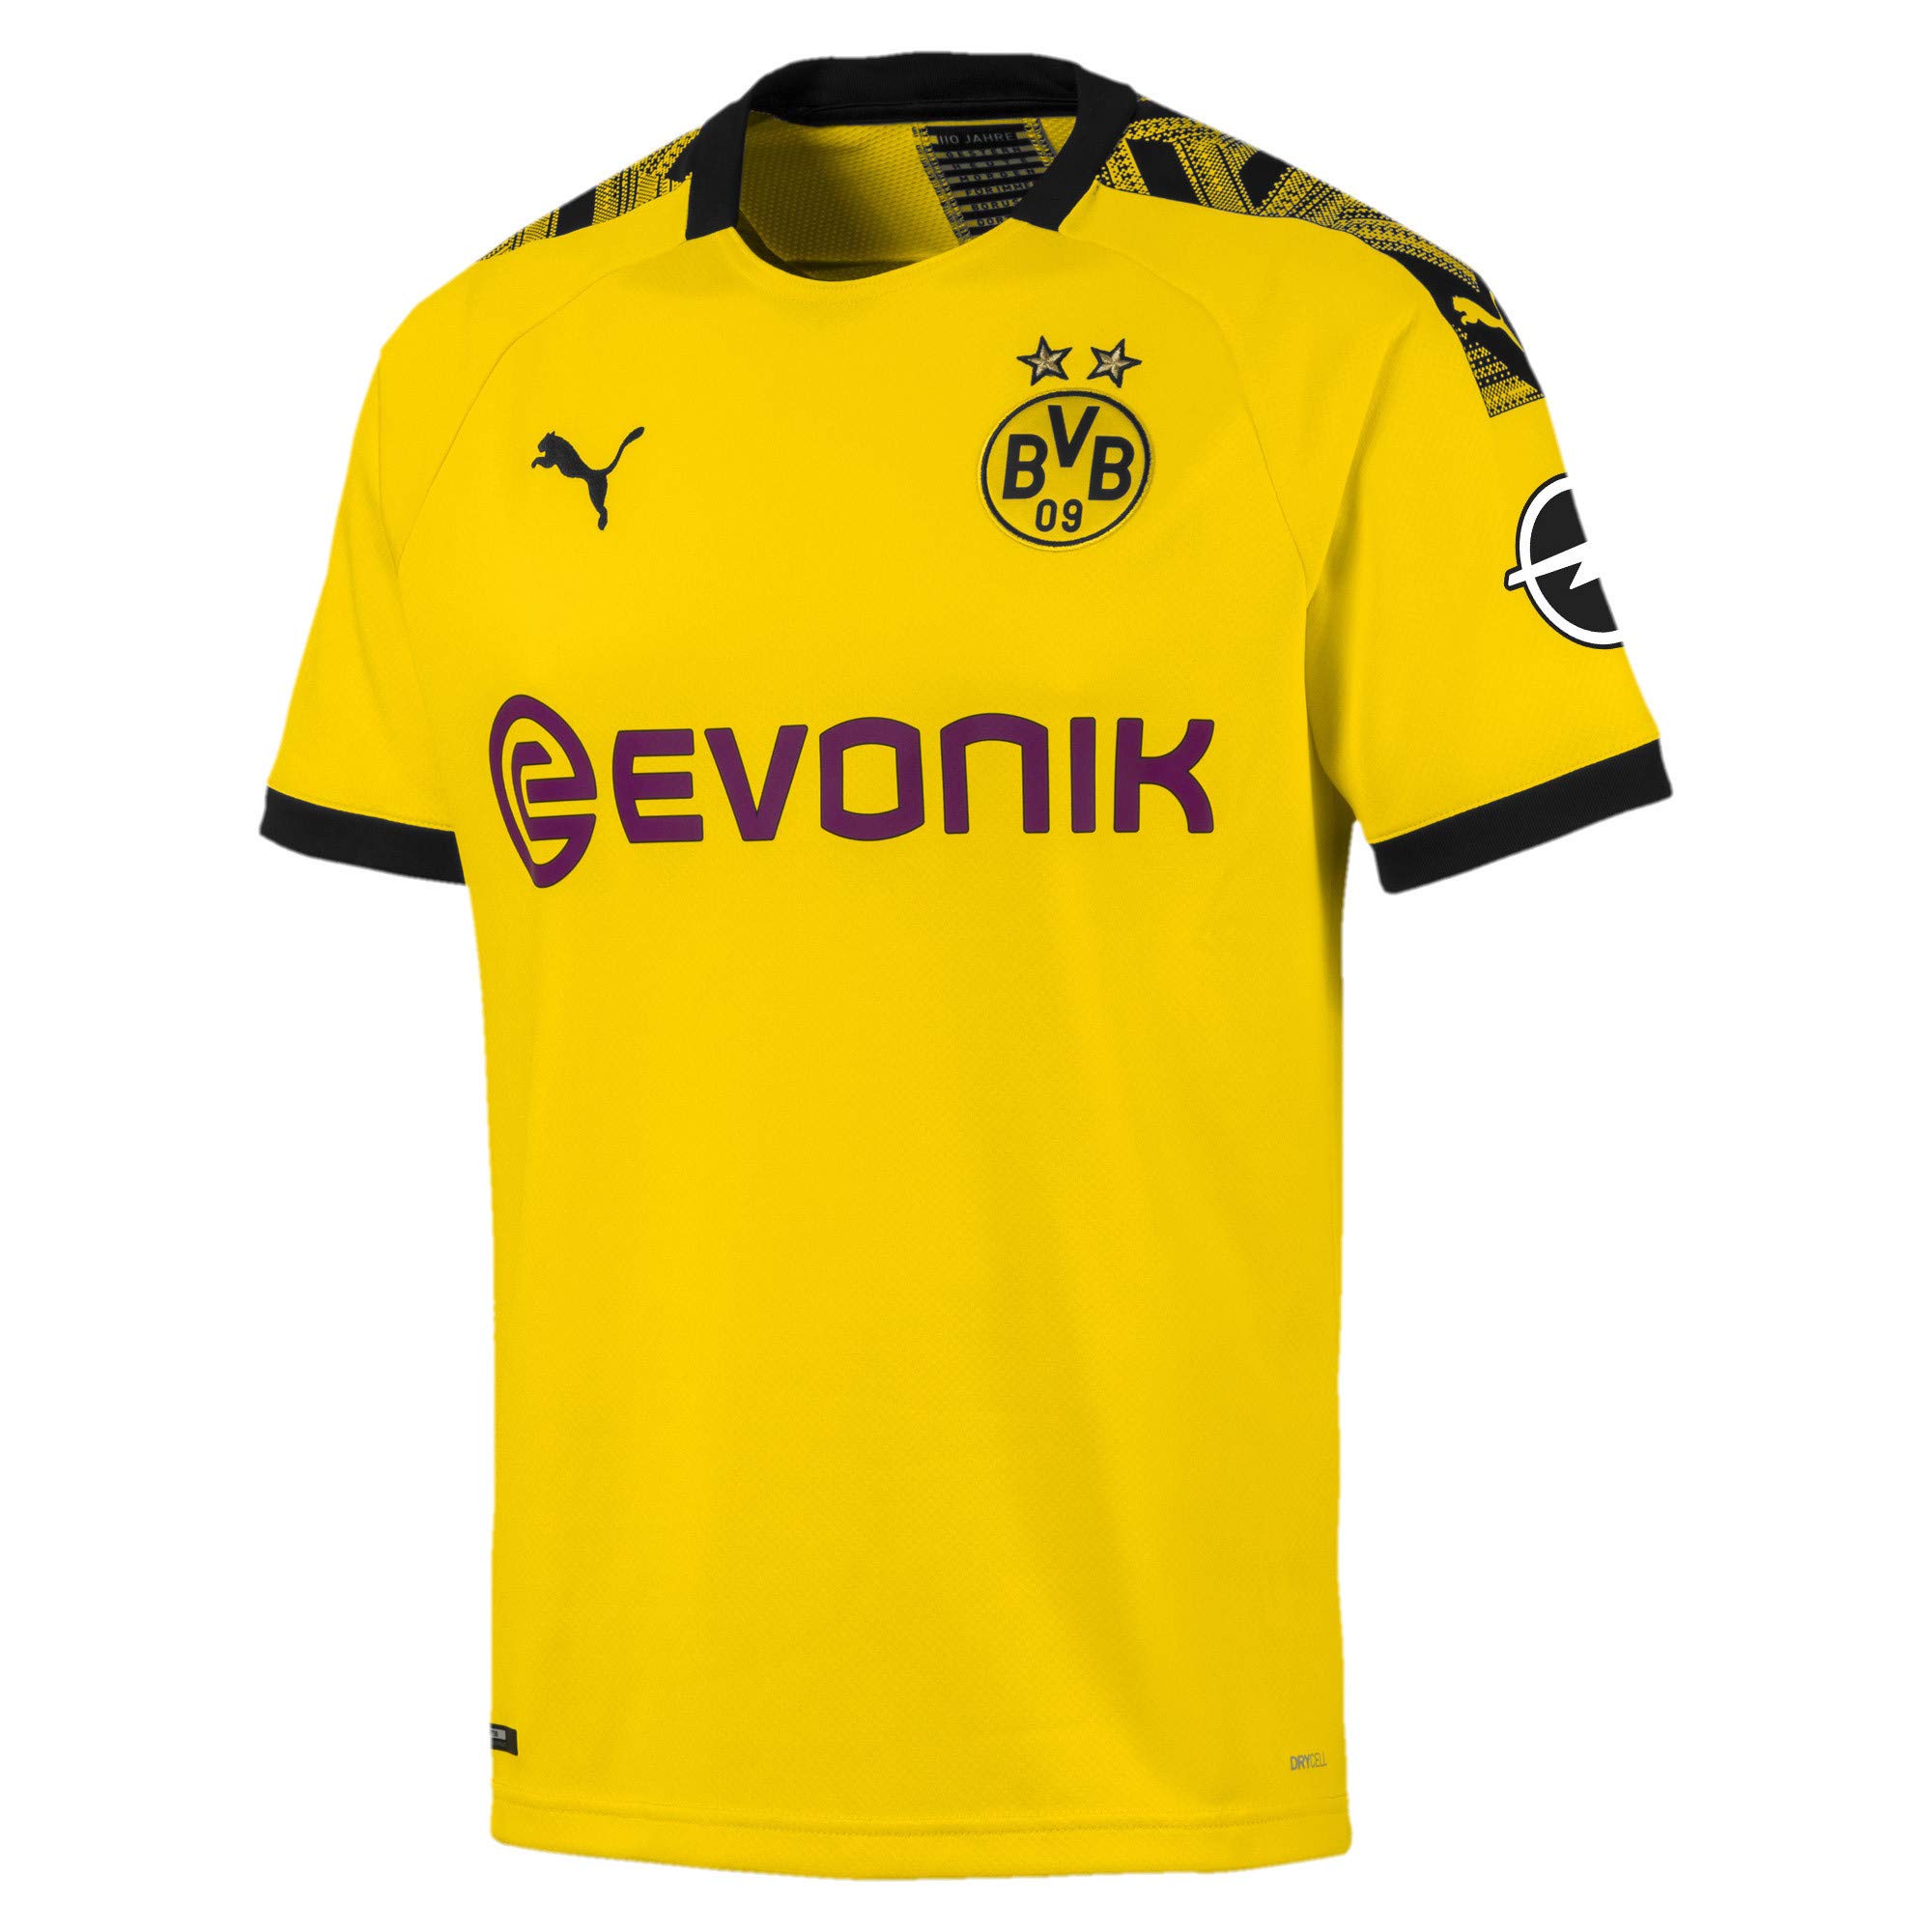 PUMA Herren BVB Home Shirt Replica with Ev Trikot, Cyber Yellow Black, S